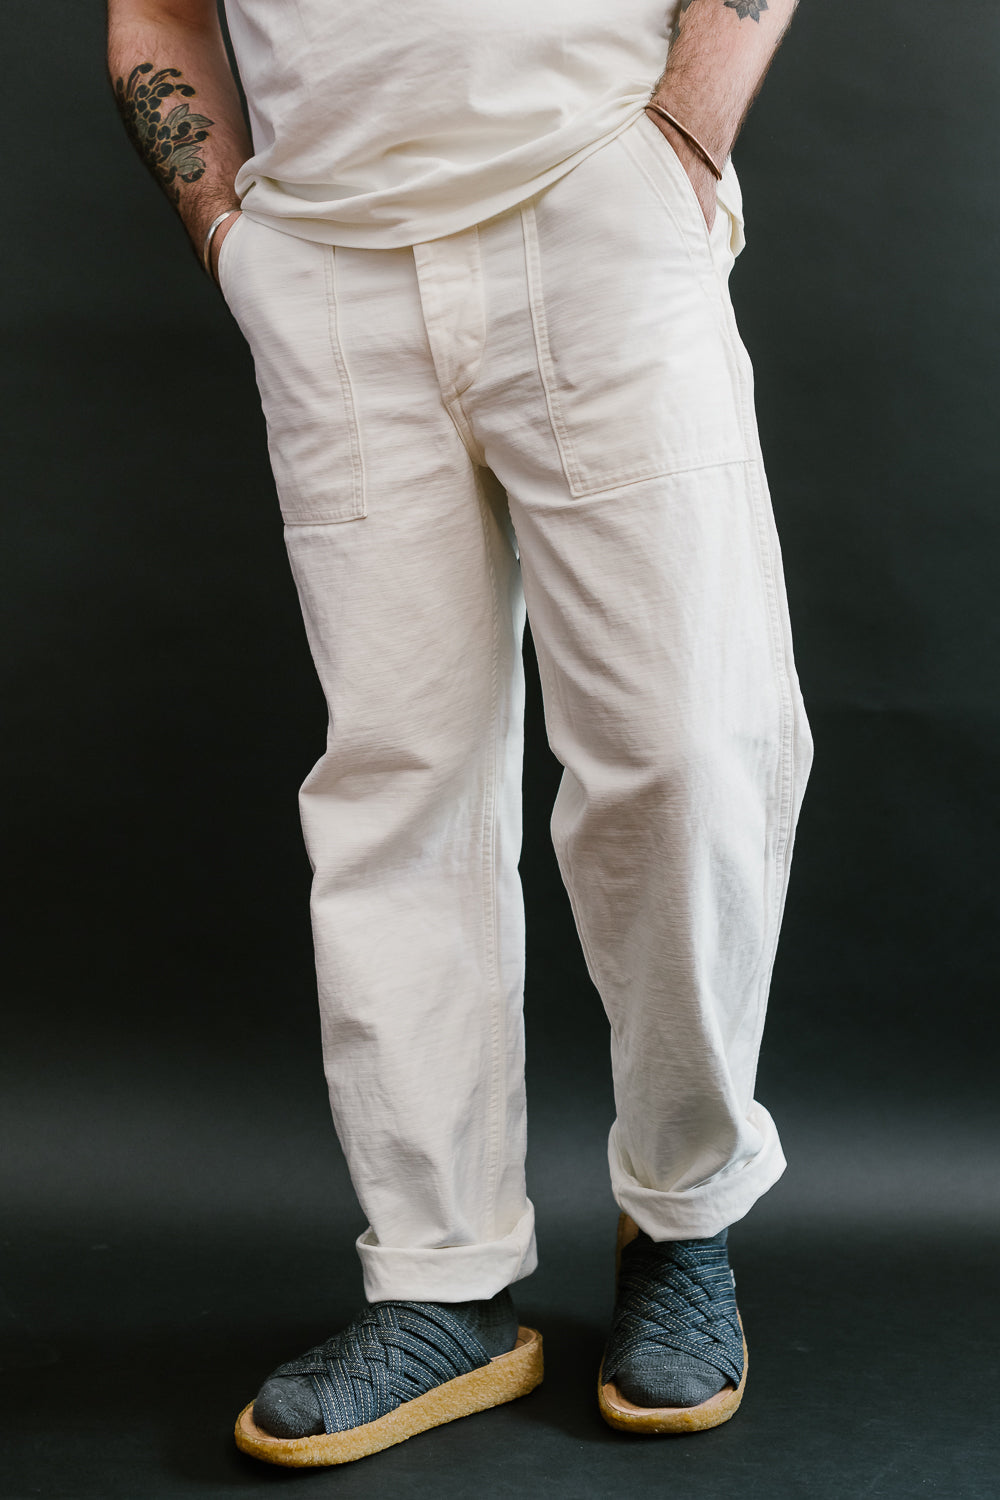 01-5002-66 - Fatigue Pants Reverse Sateen - Standard Fit - Ecru